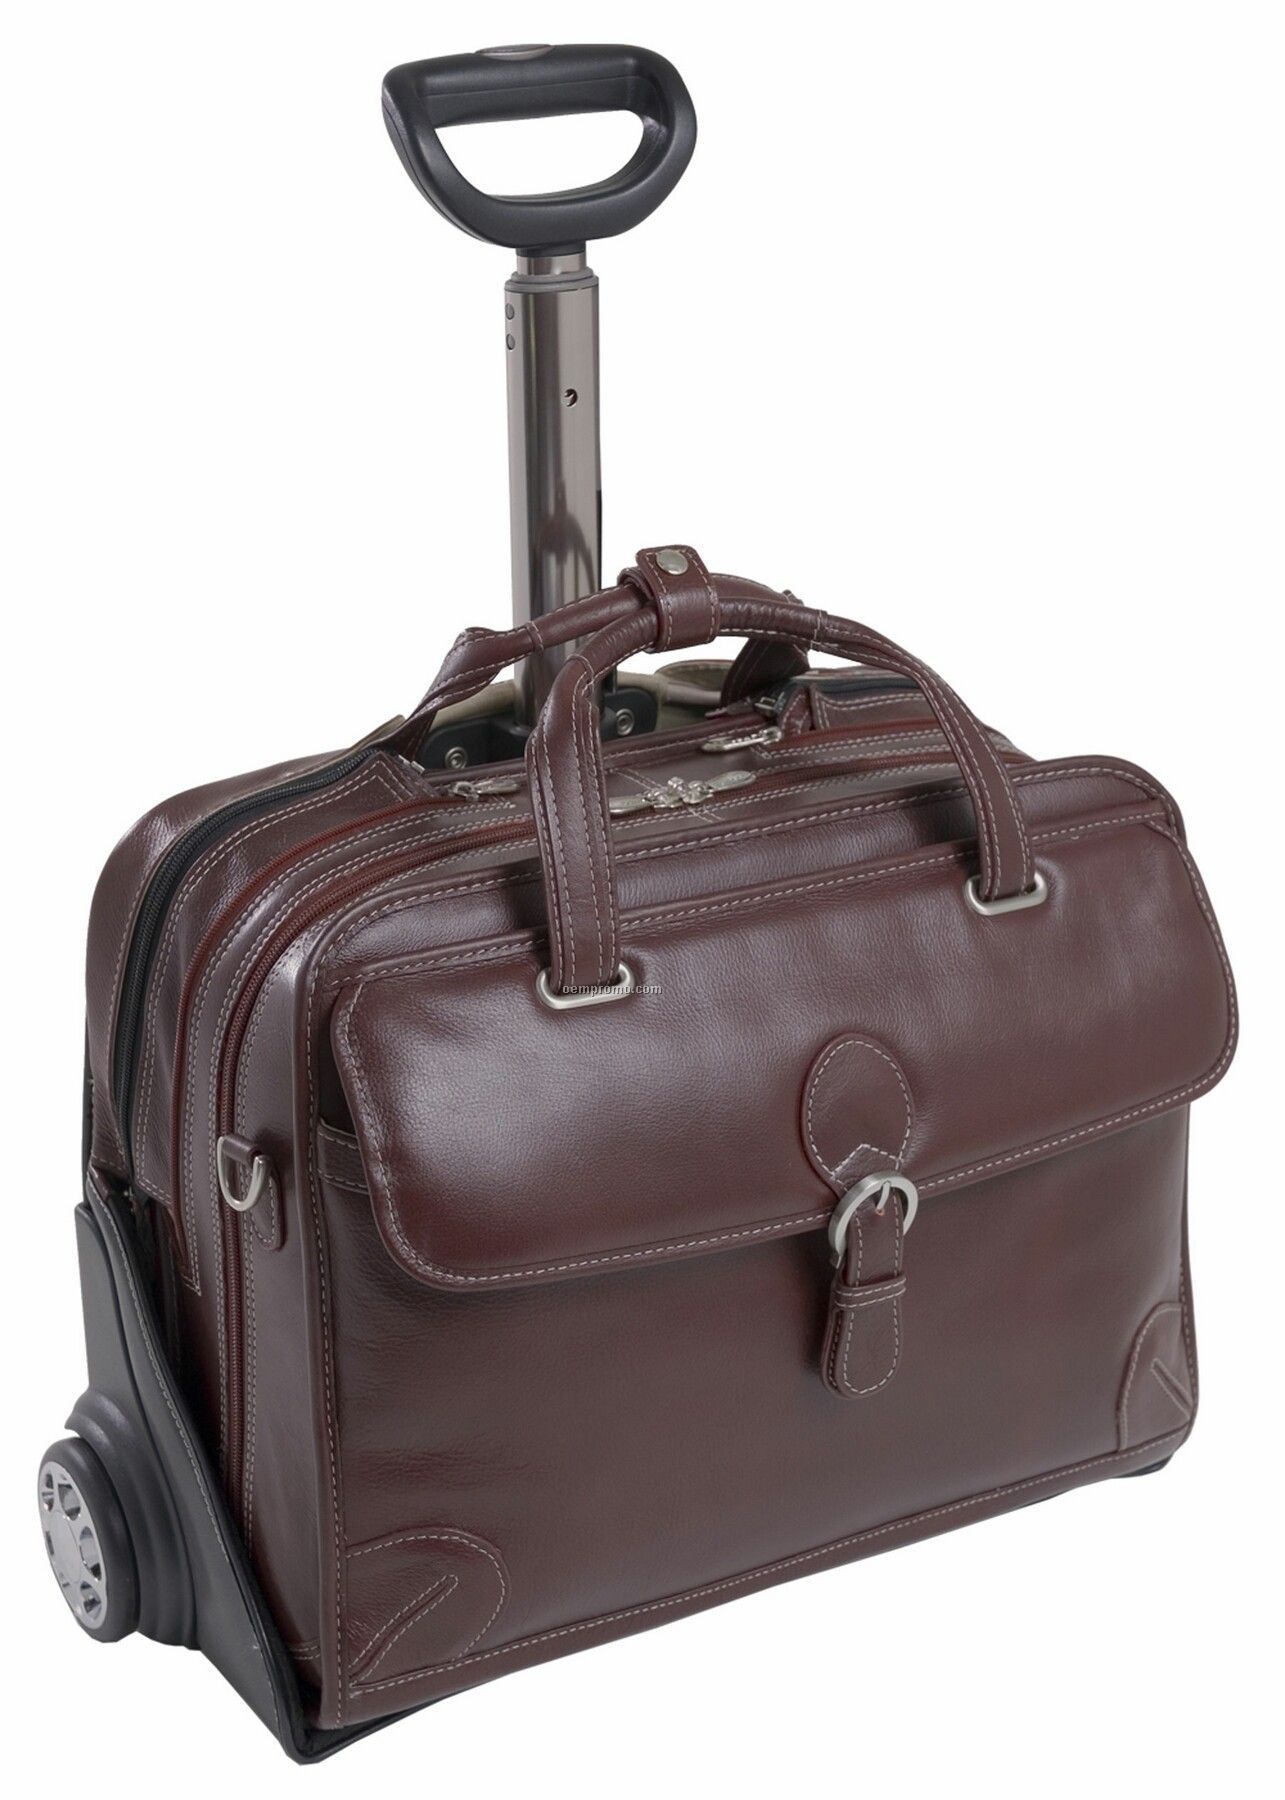 Carugetto Leather Detachable Wheeled Laptop Case - Cognac Brown